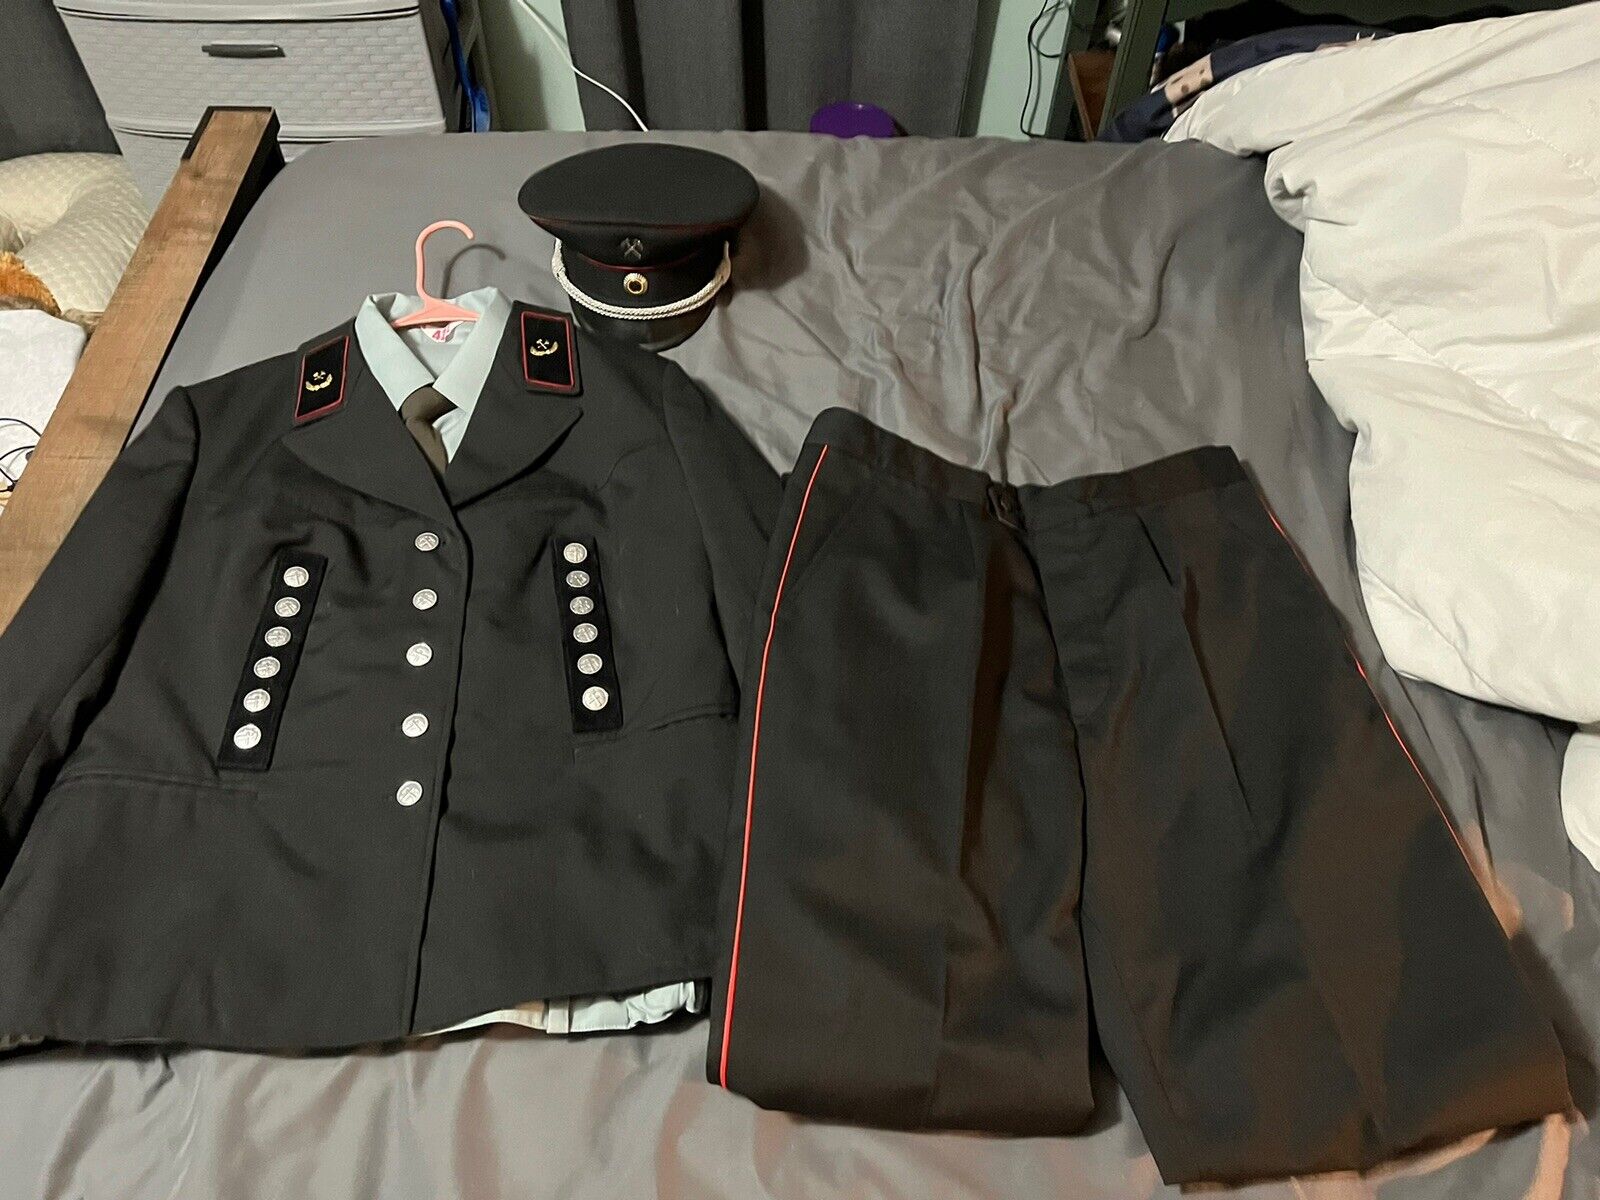 East German Dress Mining Rare (Military?) Uniform Visor Cap